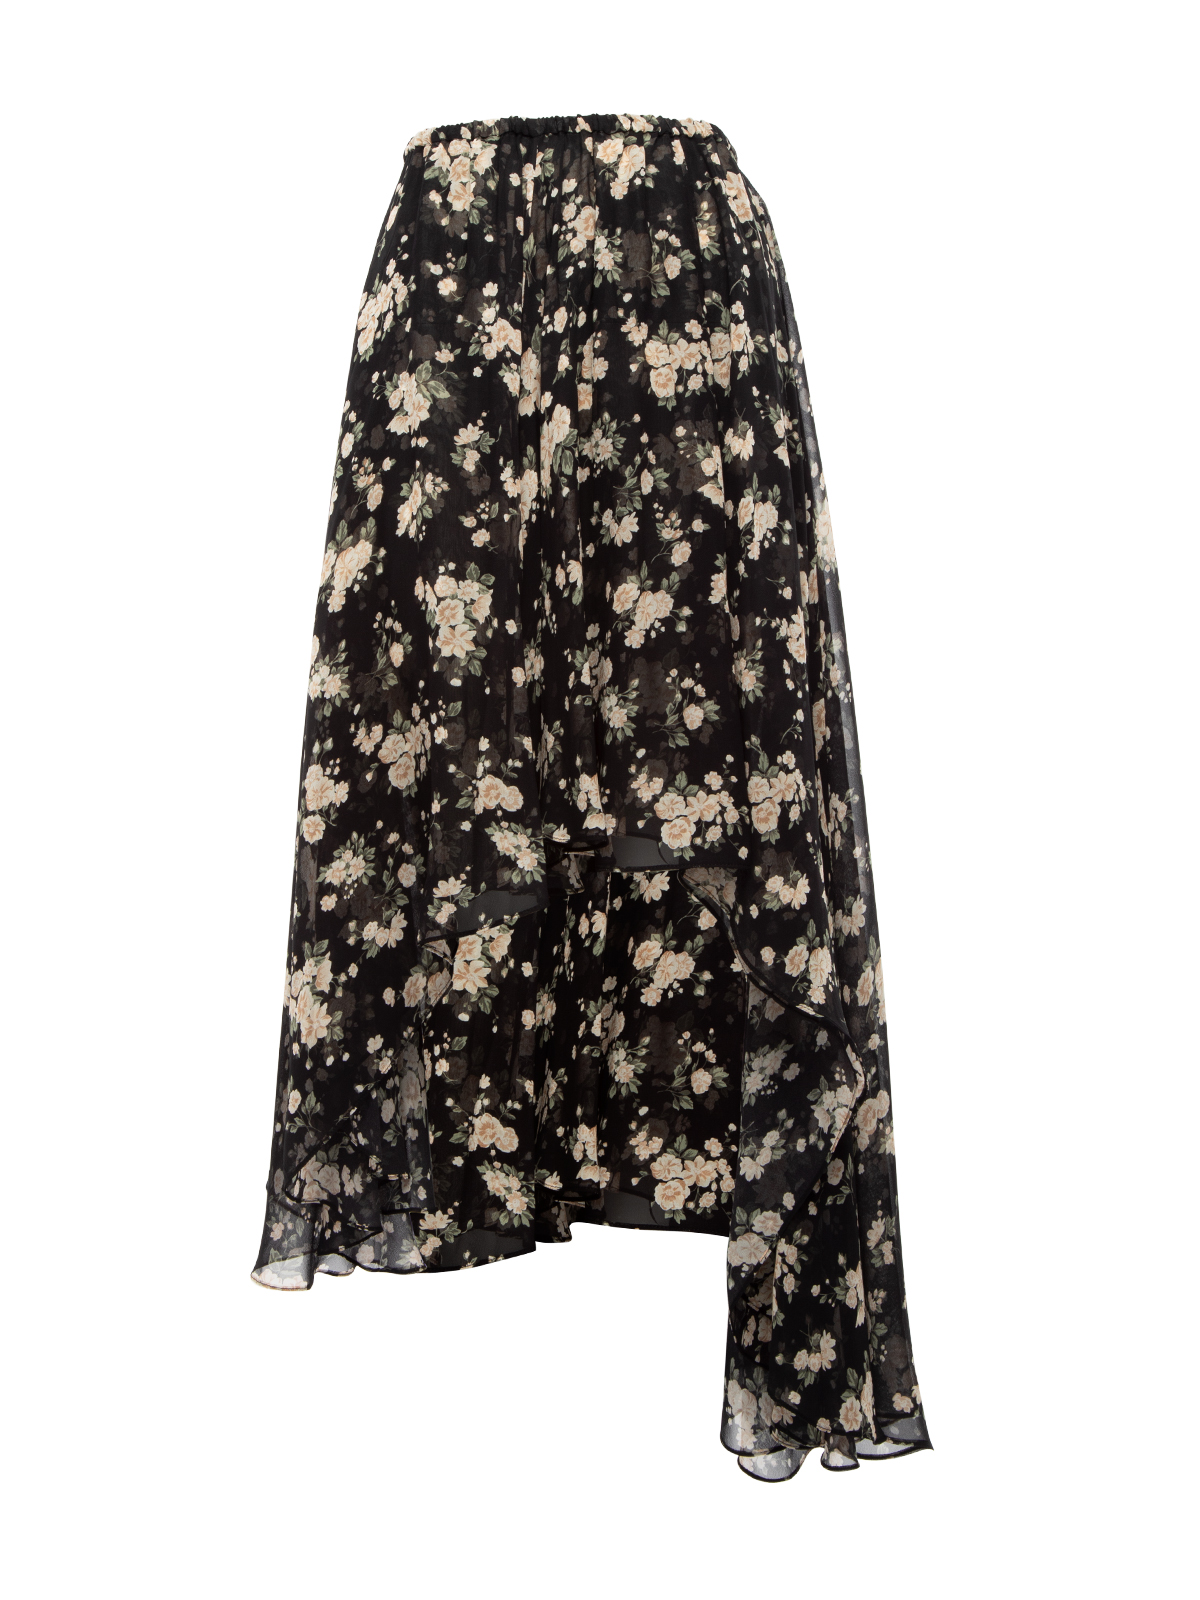 Michael Kors, Floral skirt